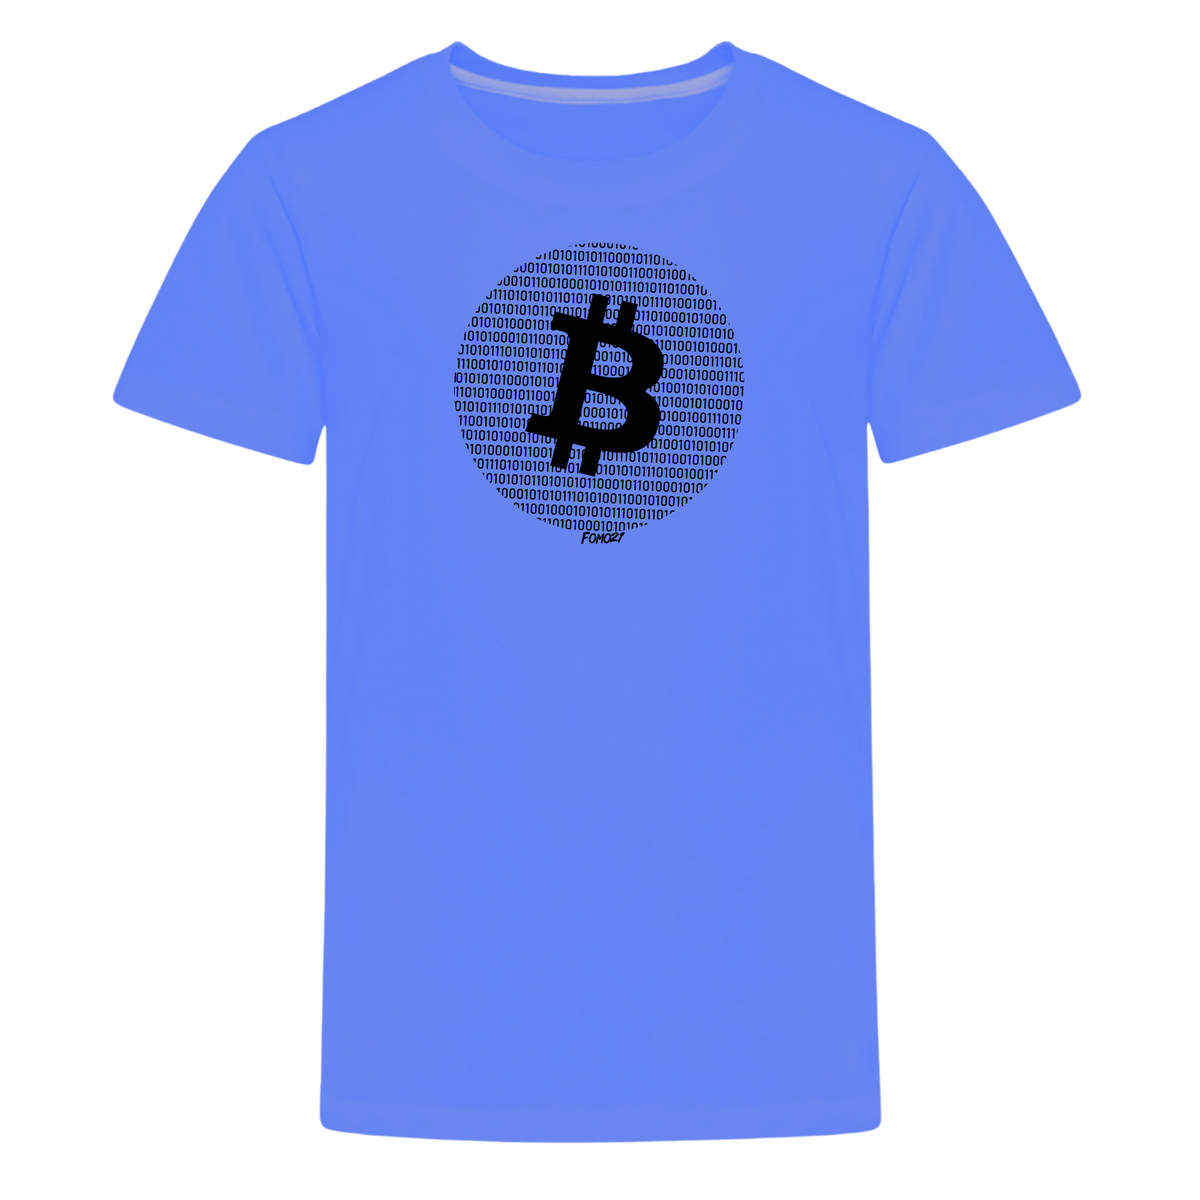 Binary Bitcoin Circle Design Youth T-Shirt - fomo21